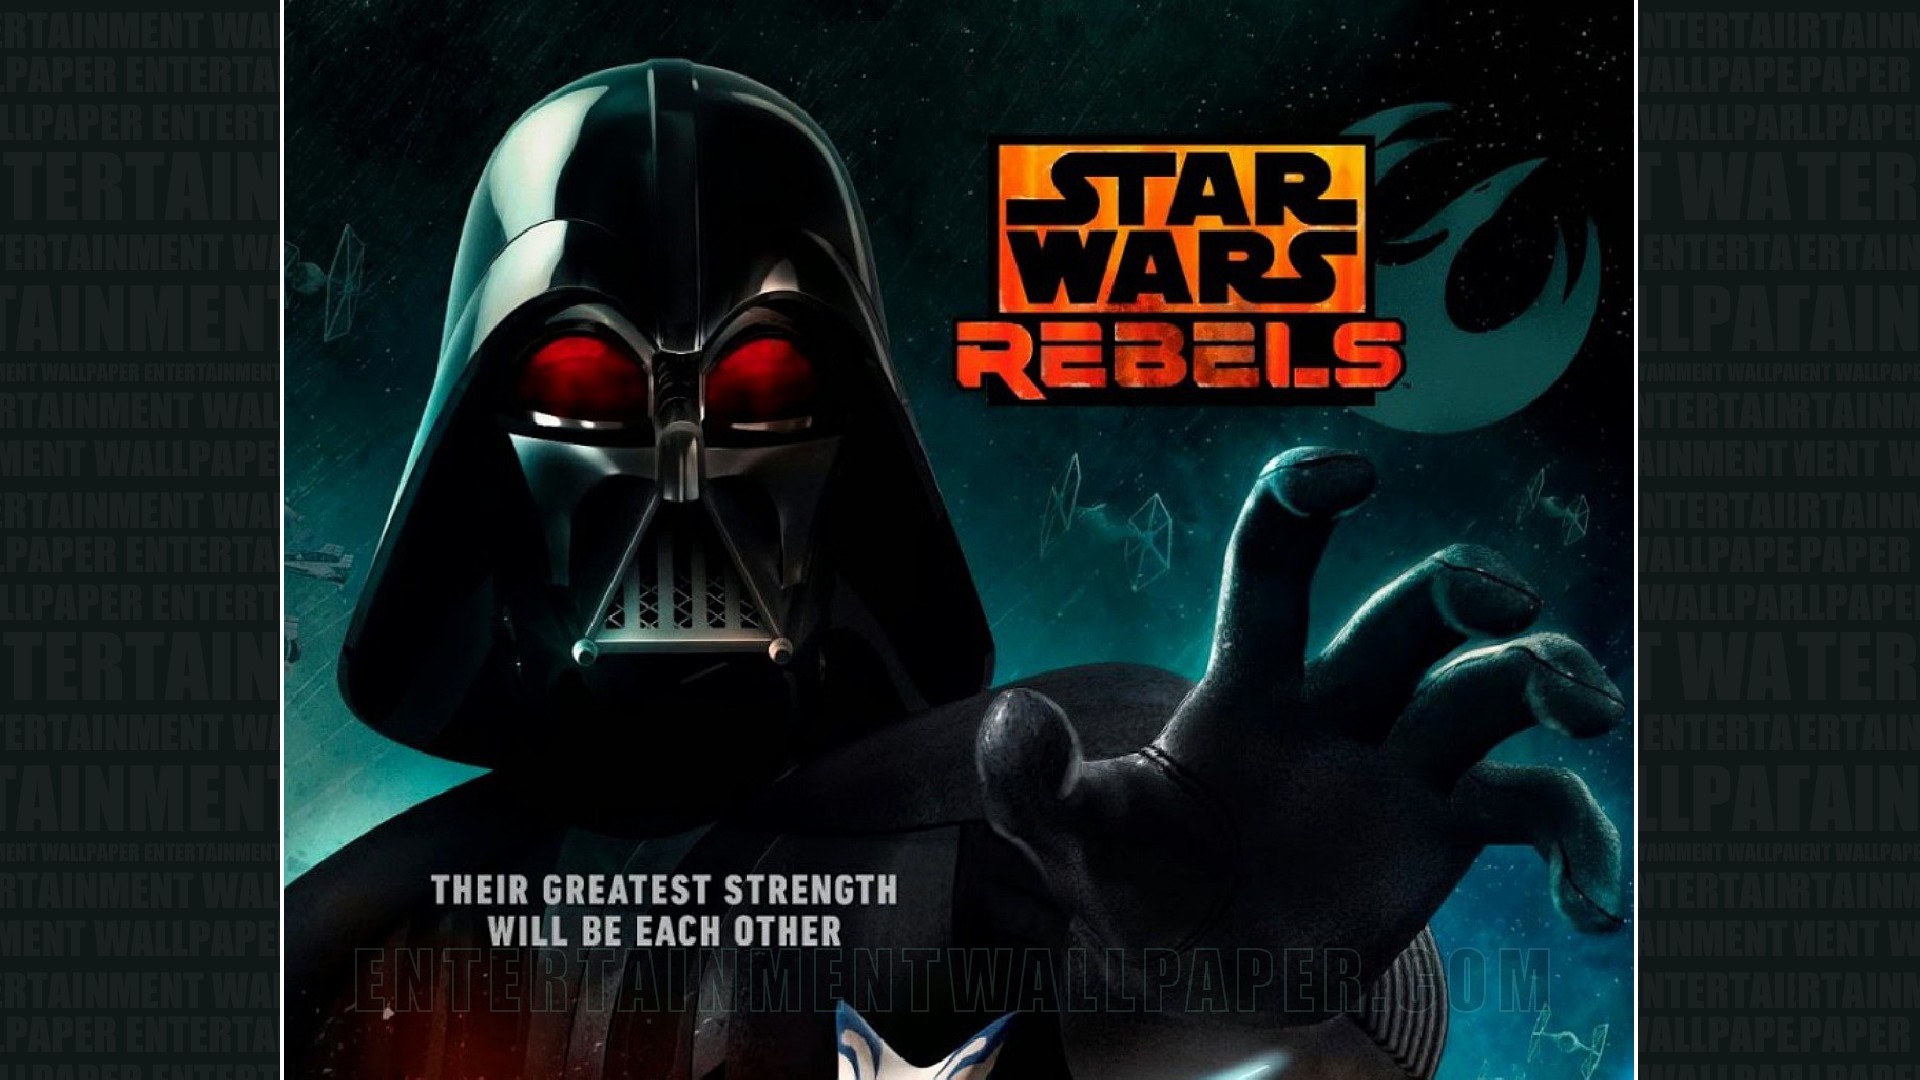 Star Wars Rebels Wallpaper – Original size, download now